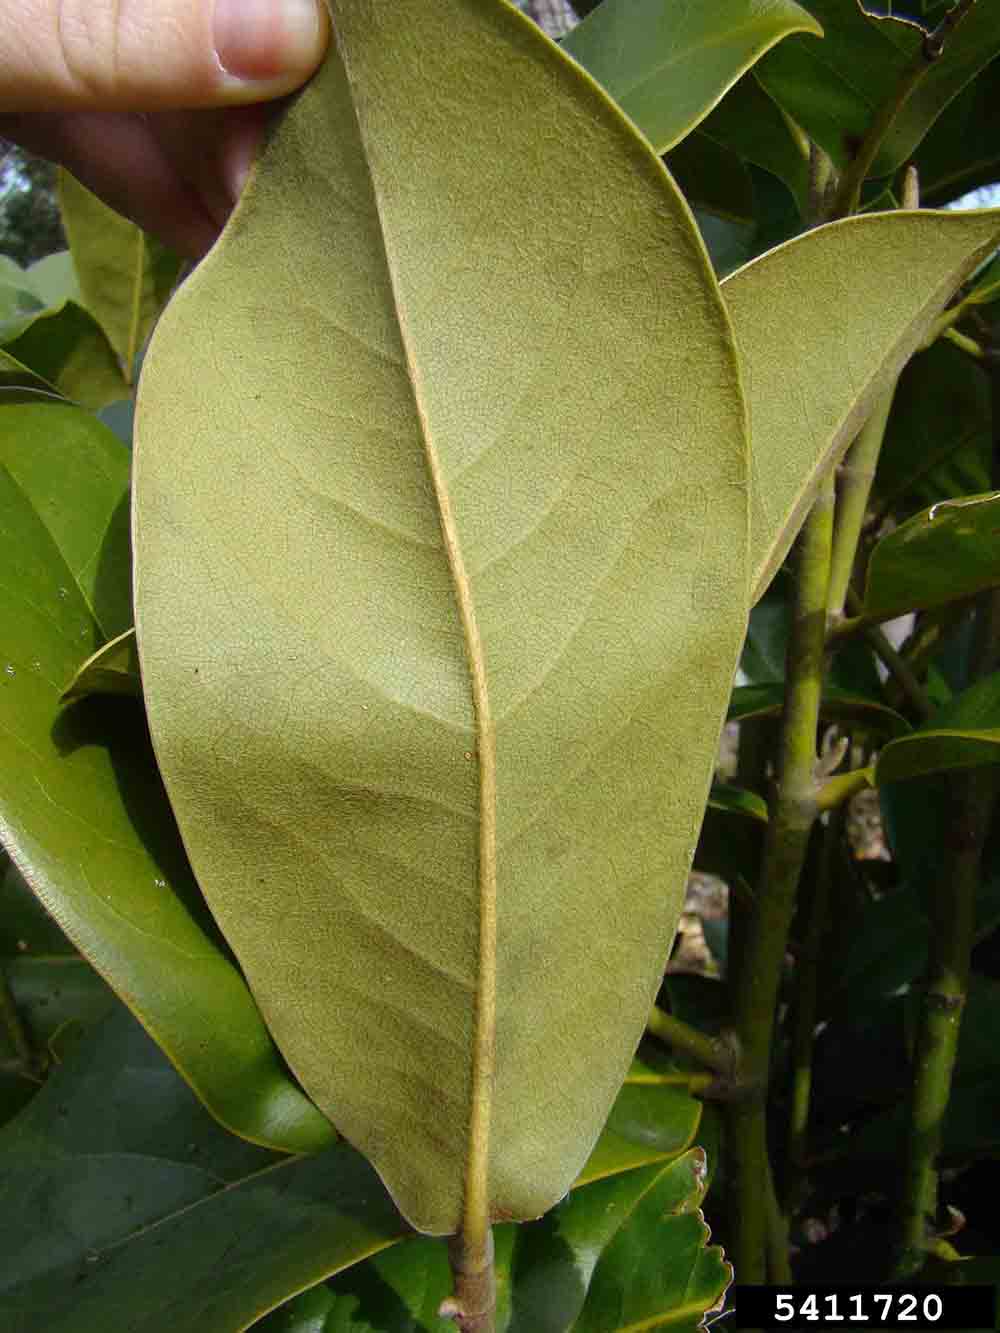 Southern magnolia leaf, showing downy underside